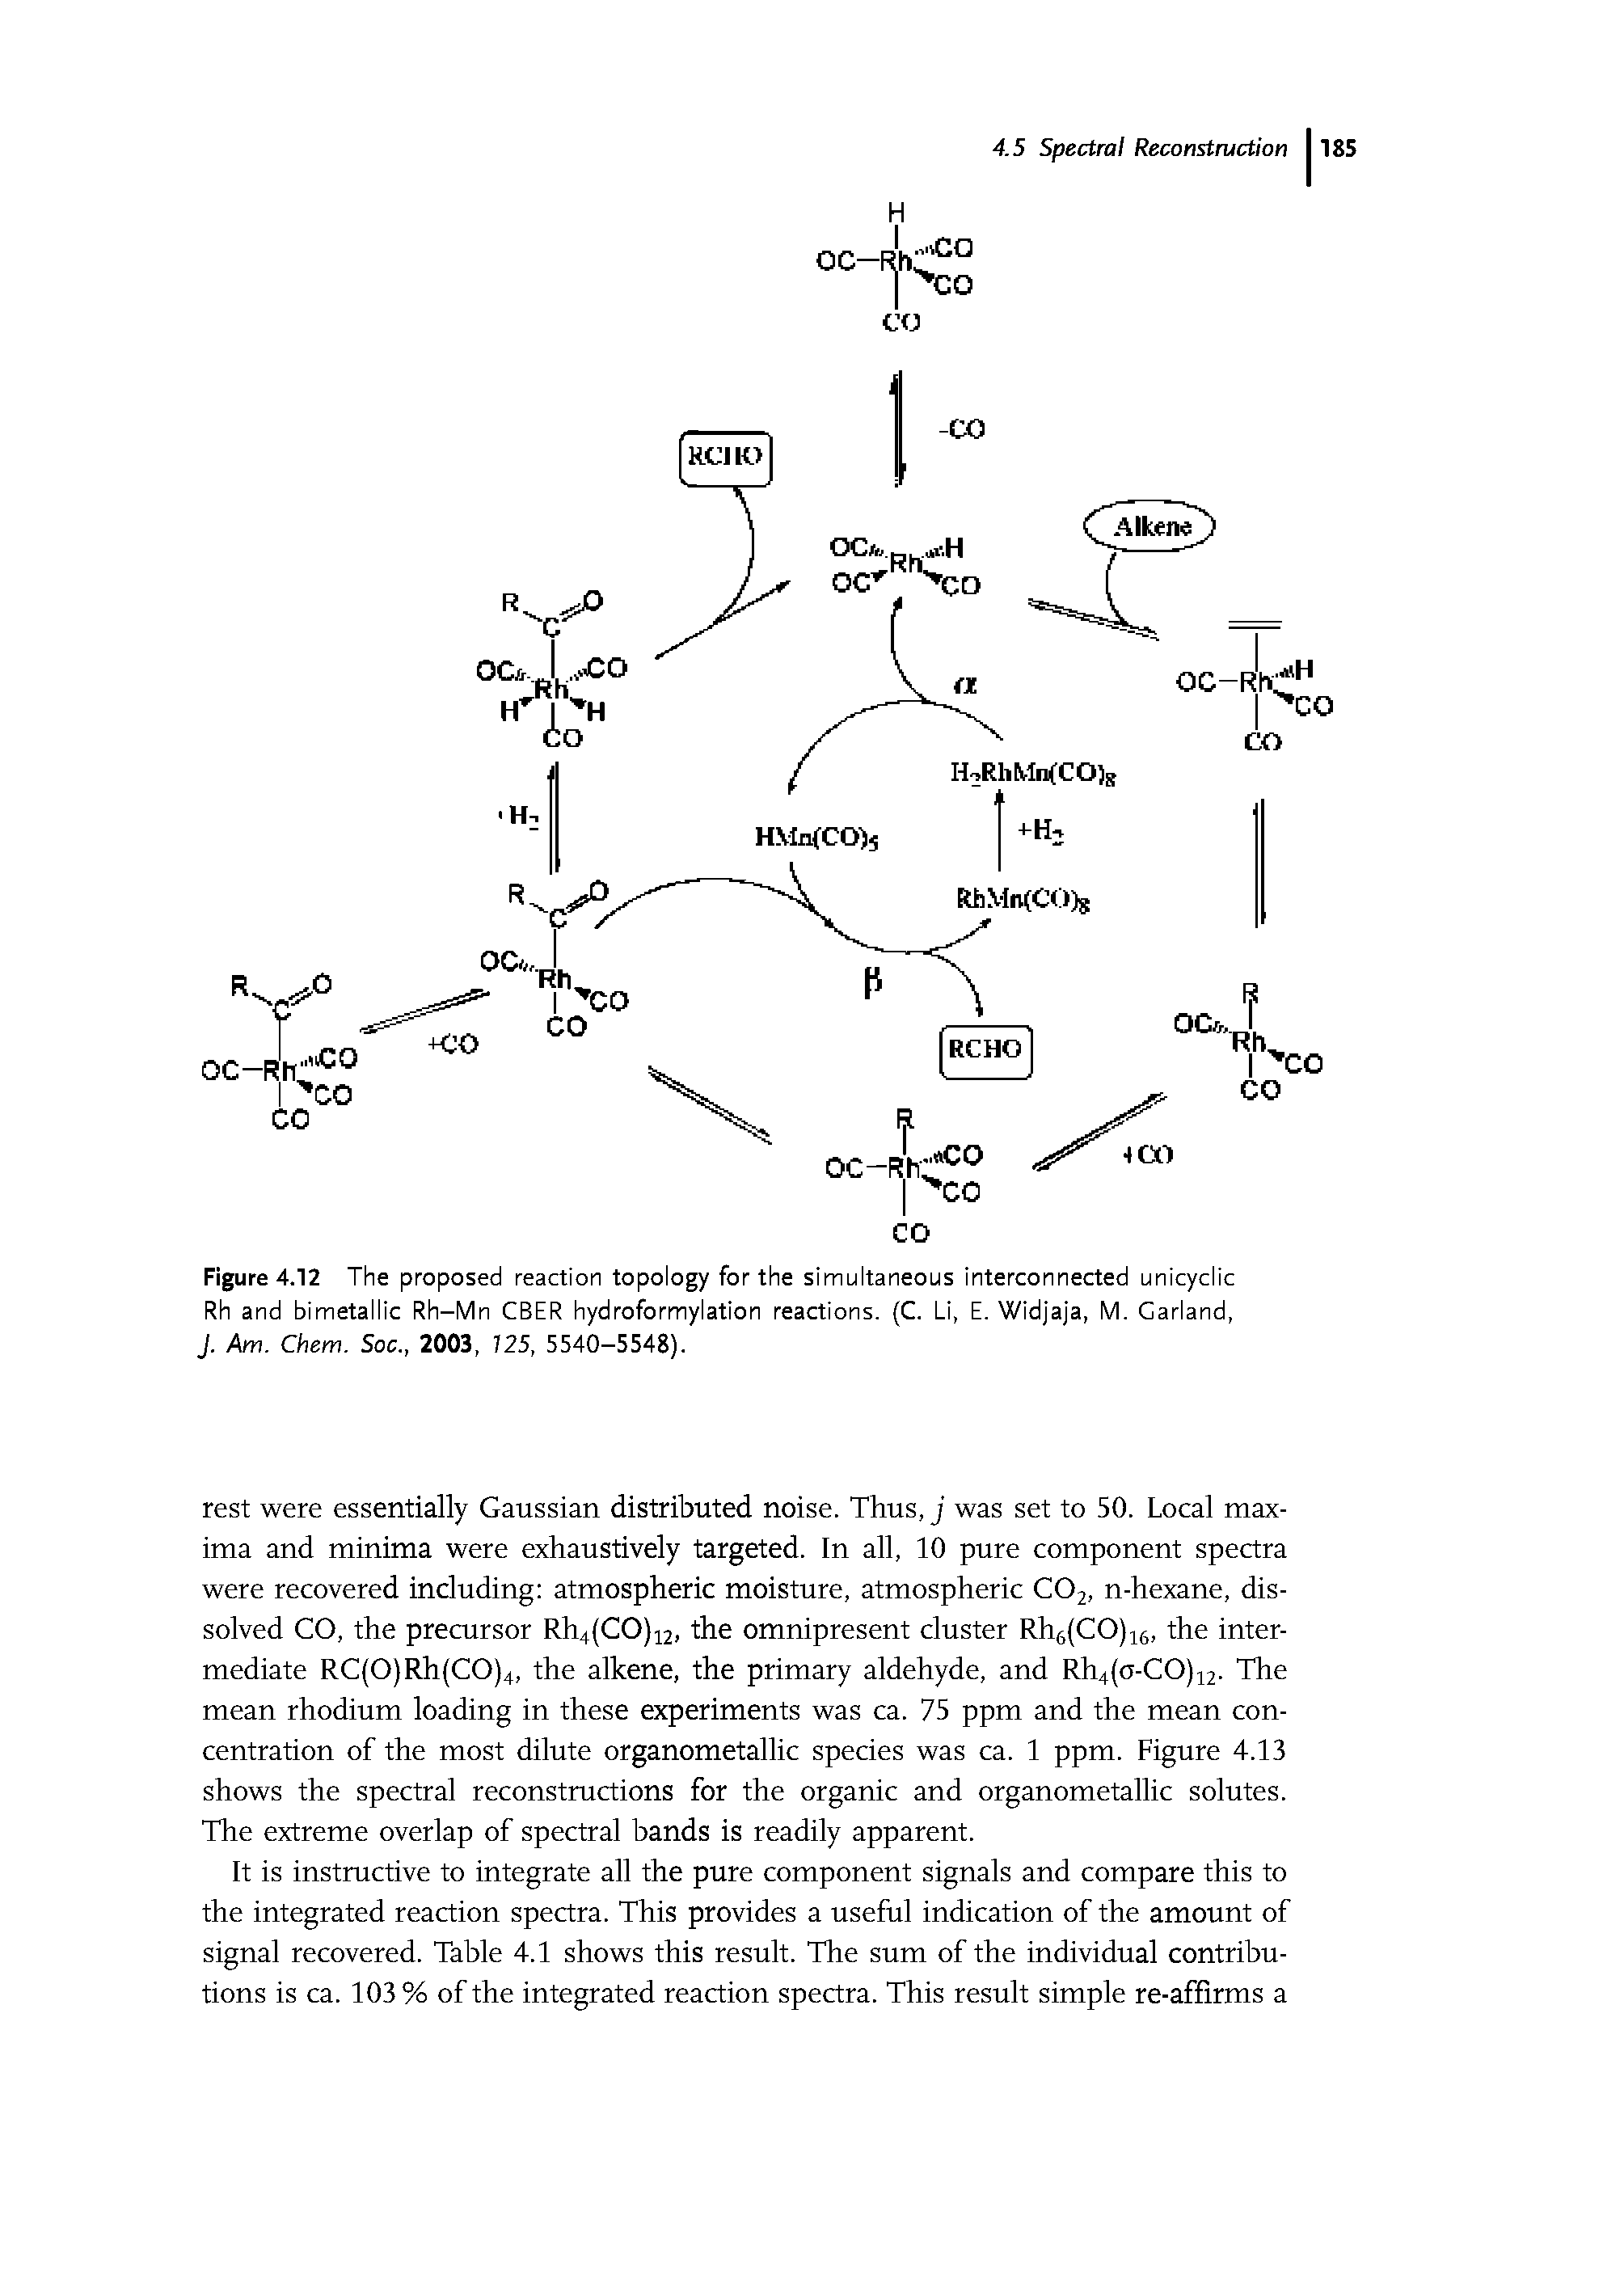 Figure 4.12 The proposed reaction topology for the simultaneous interconnected unicyclic Rh and bimetallic Rh-Mn CBER hydroformylation reactions. (C. Li, E. Widjaja, M. Garland, J. Am. Chem. Soc., 2003, 725, 5540-5548).